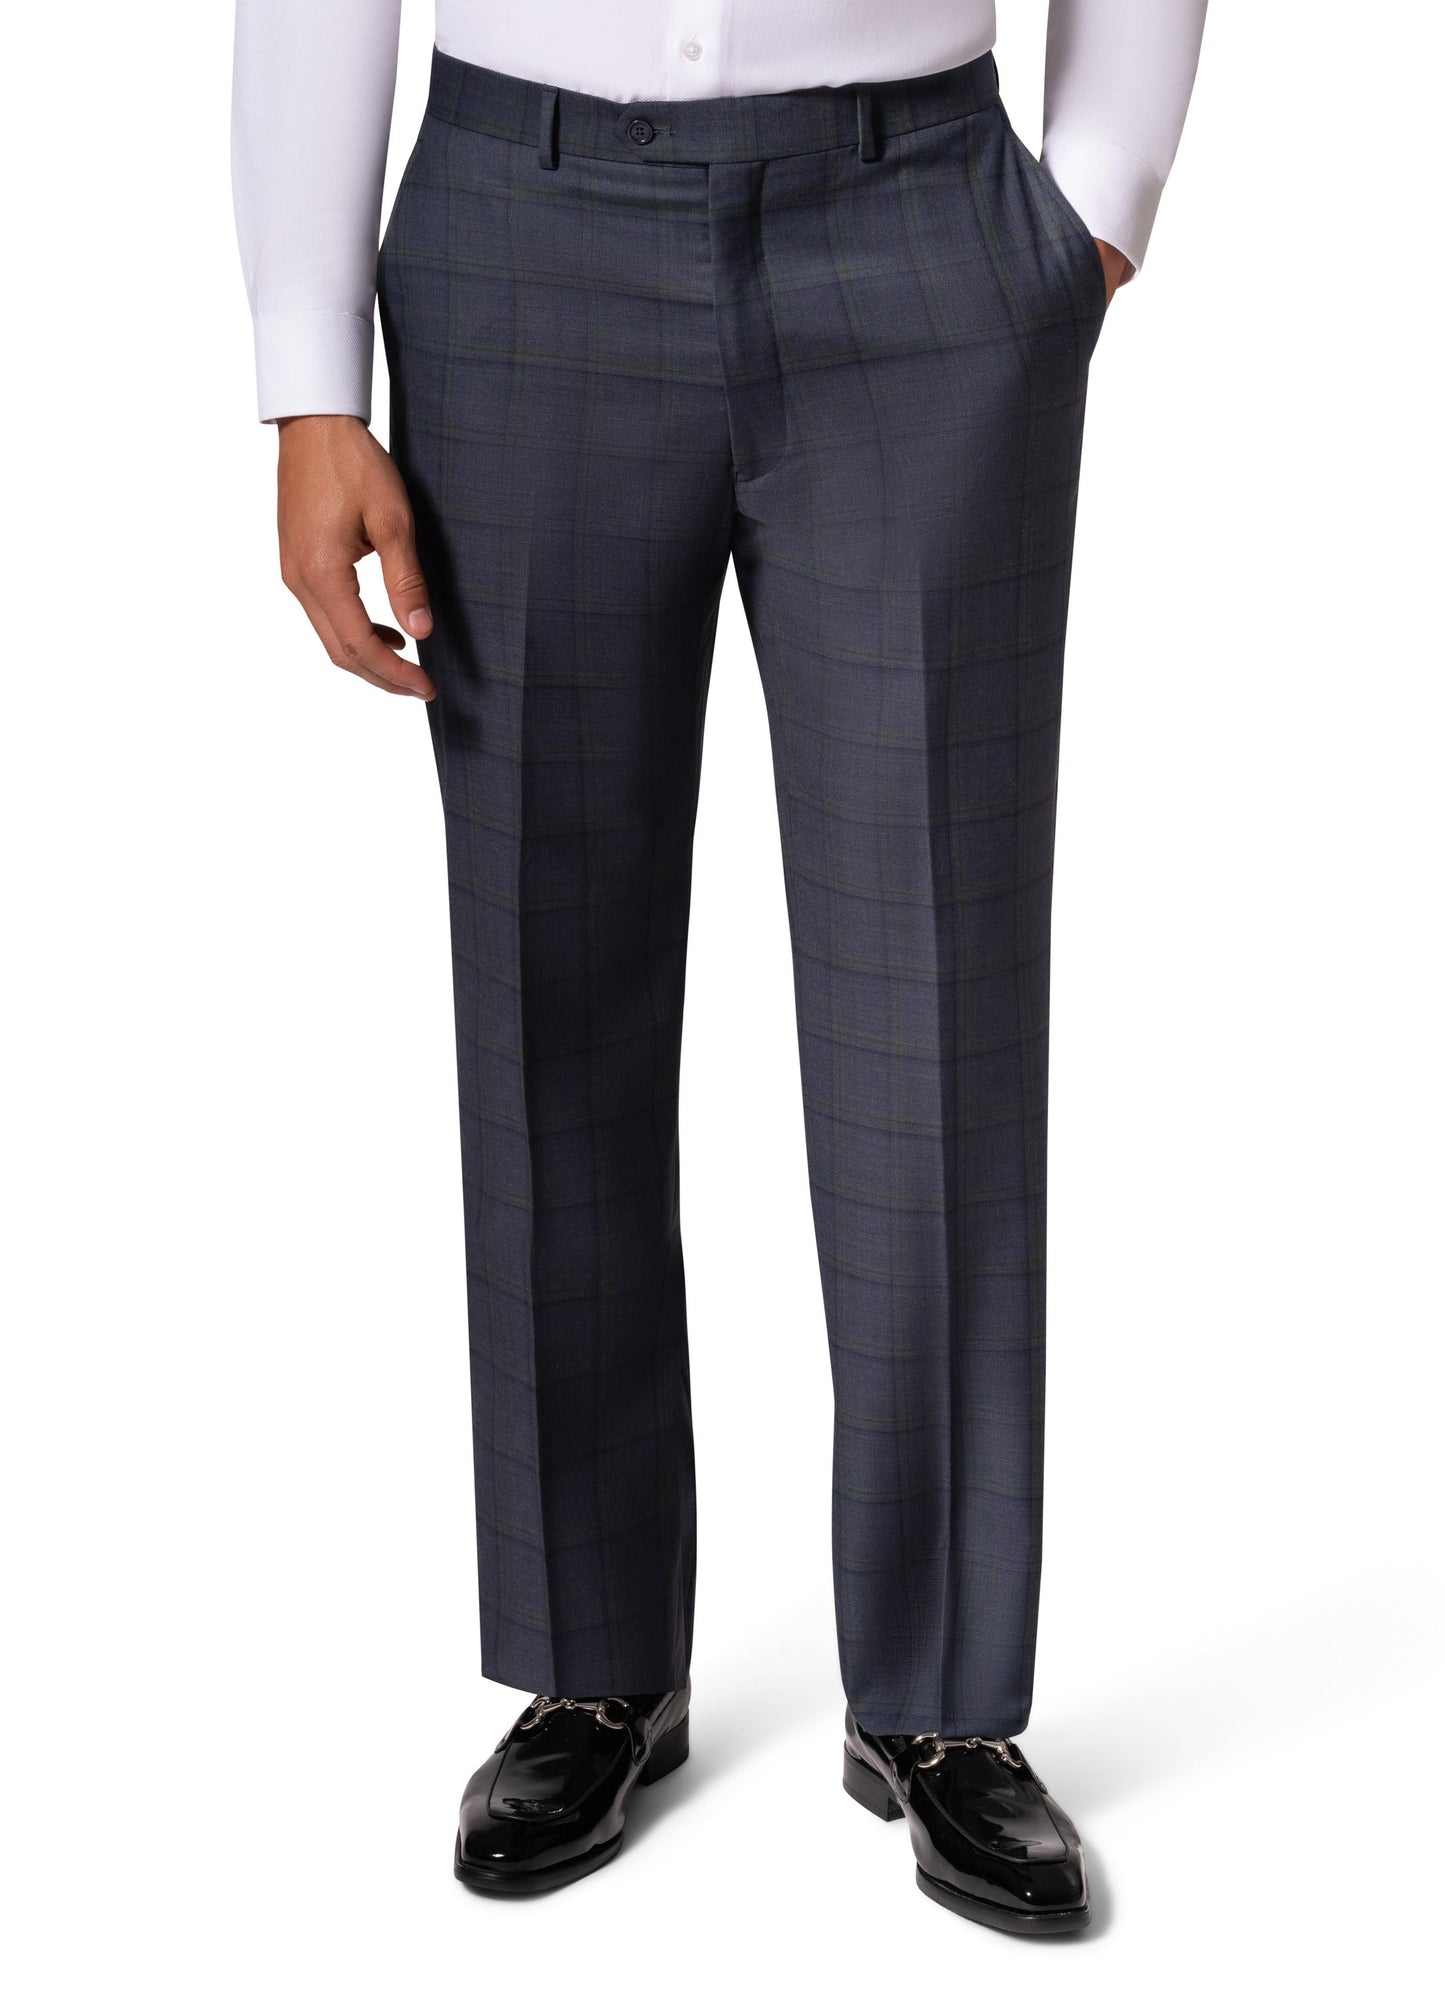 Berragamo Elegant - Faille Wool Modern D/B Suit 10005.4055/5000